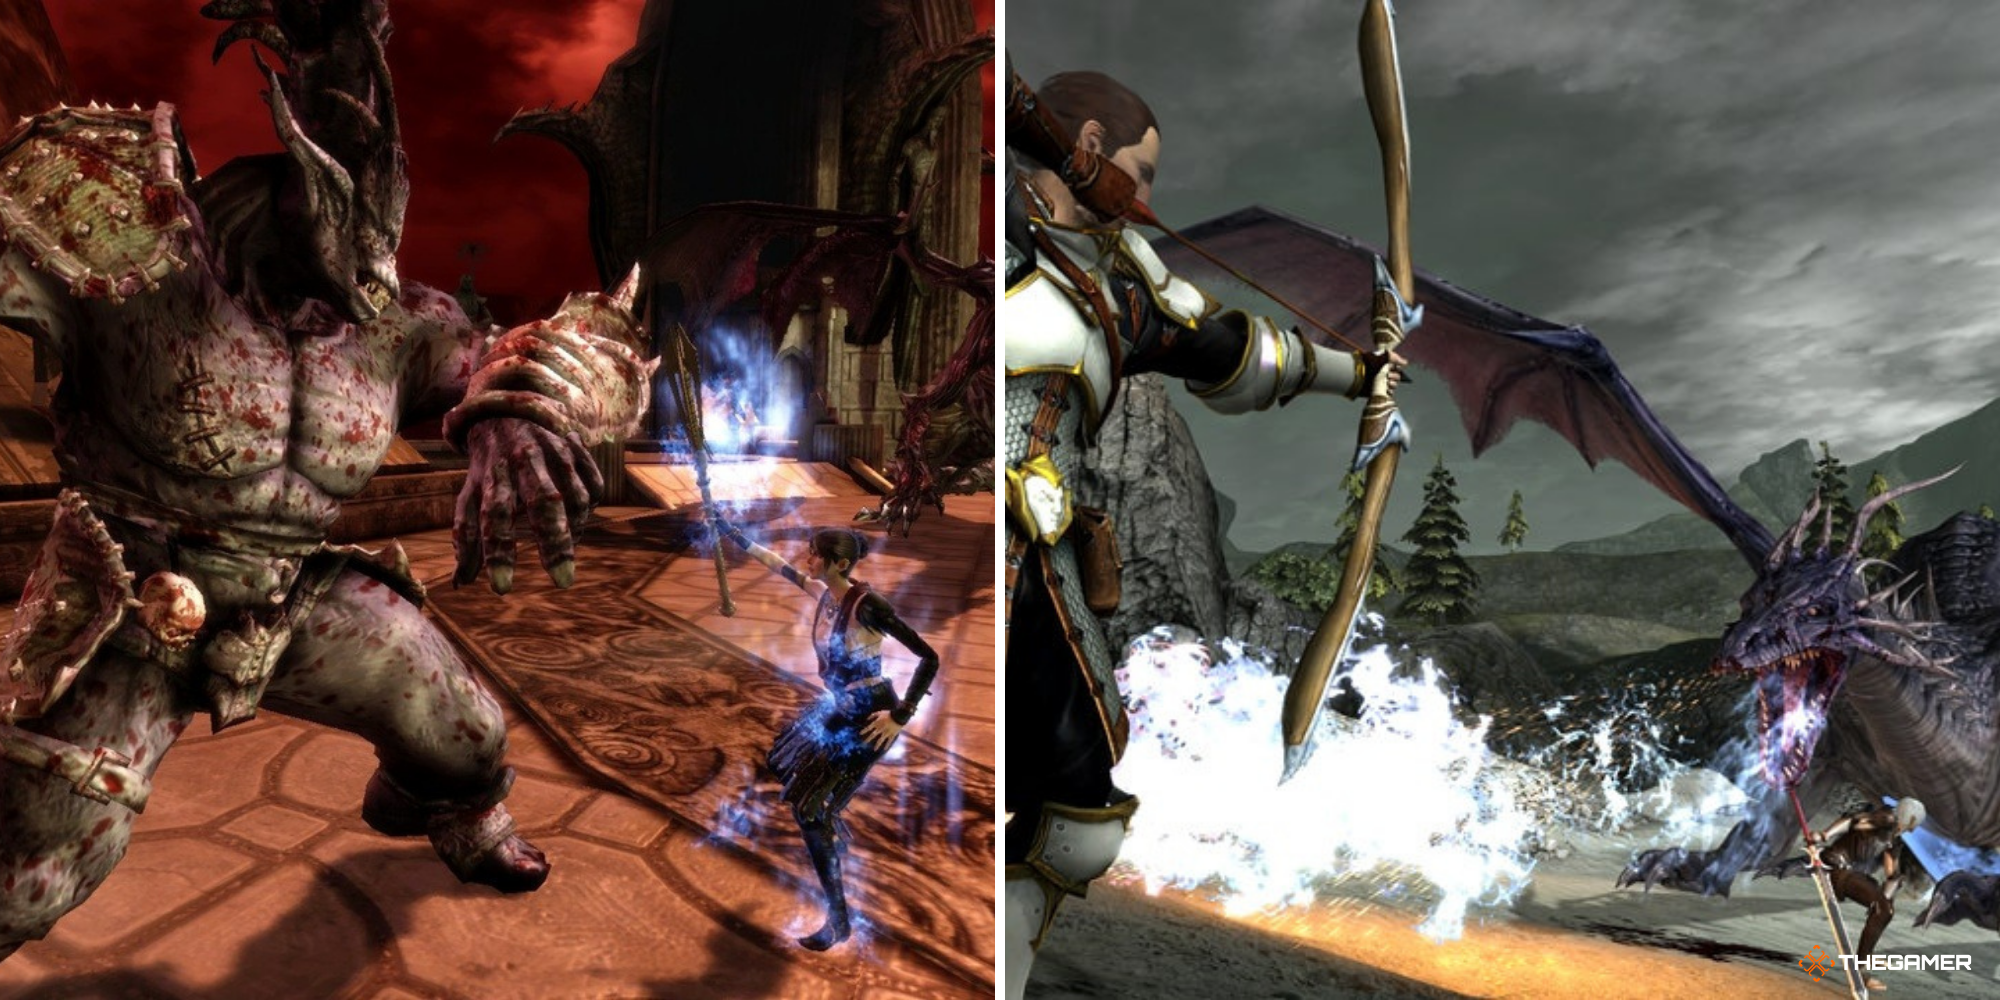 Dragon Age Combat Morrigan Fighting Ogre On Left, Sebastian Fighting Dragon On Right